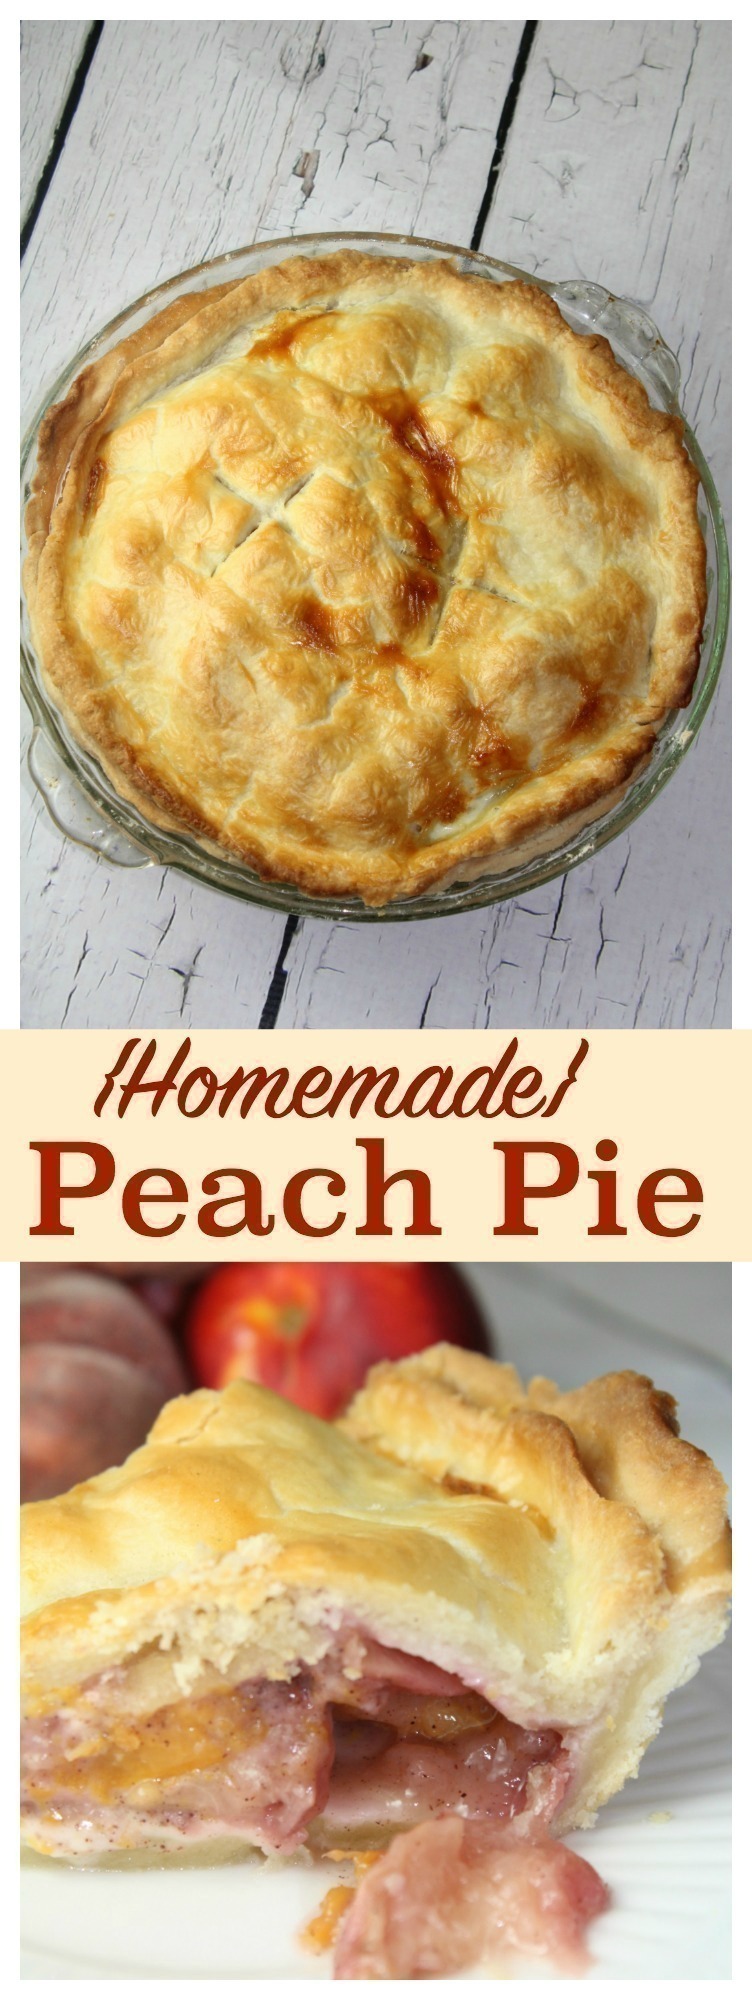 Homemade Peach Pie